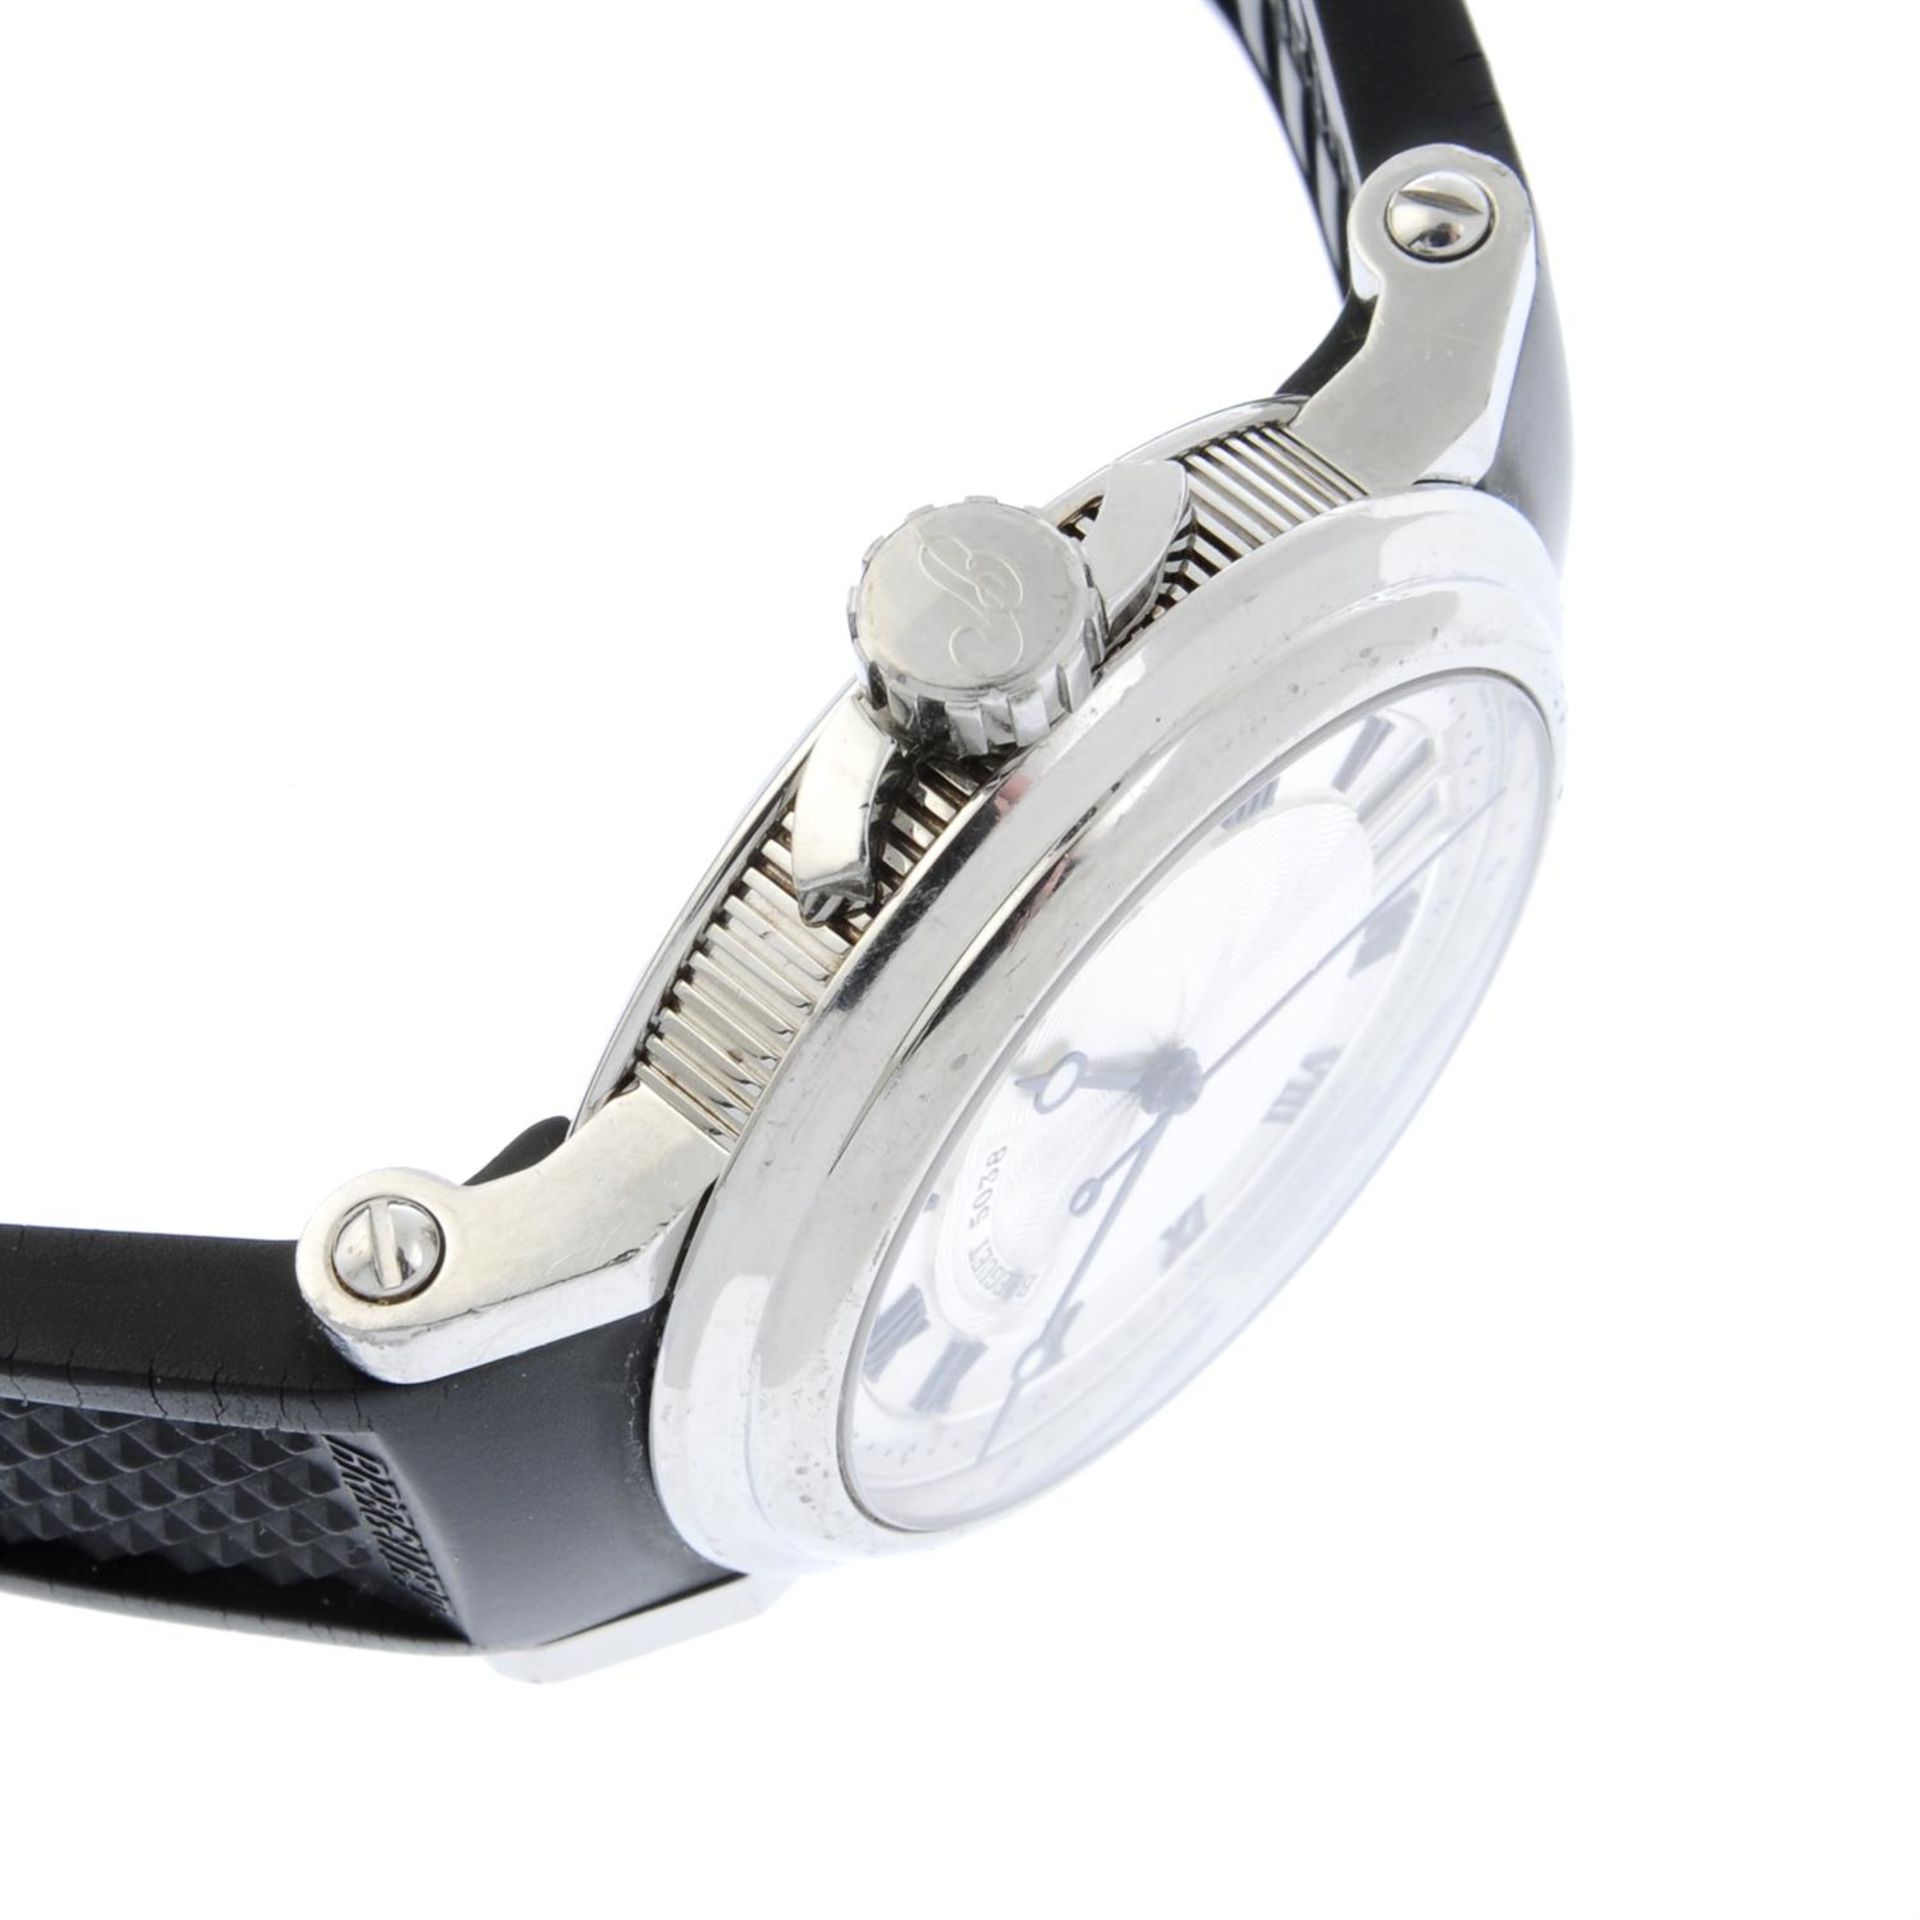 BREGUET - a stainless steel Marine wrist watch, 40mm. - Image 3 of 6